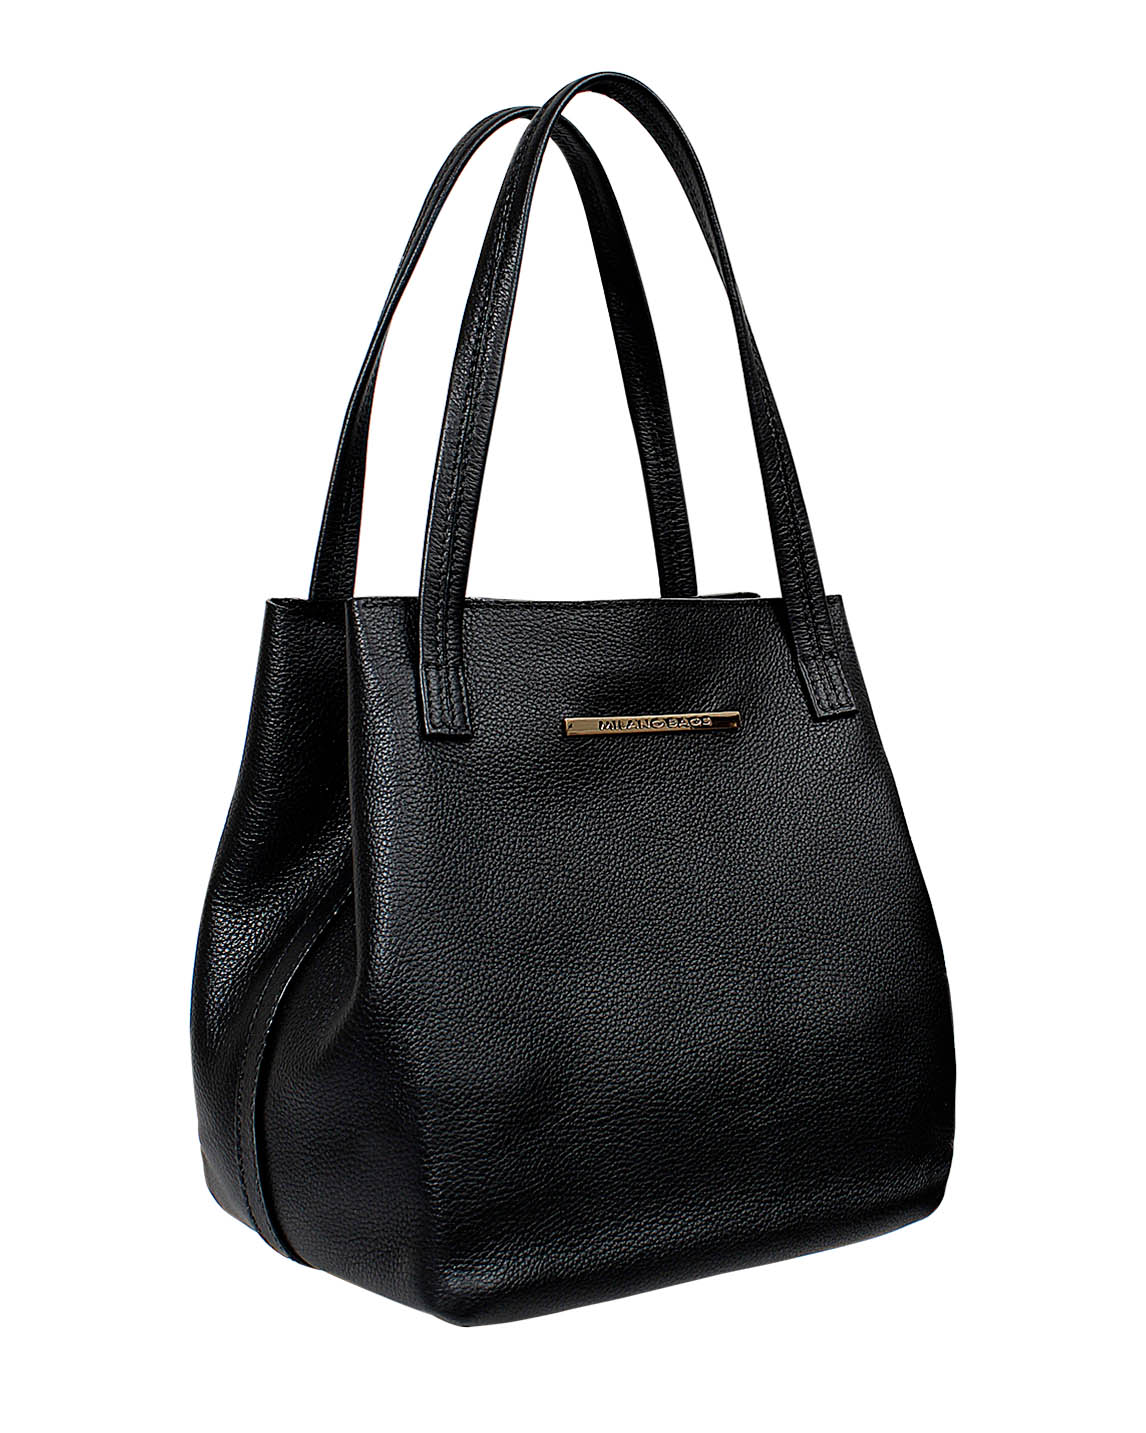 Cartera Tote Bag DS-3101 Color Negro